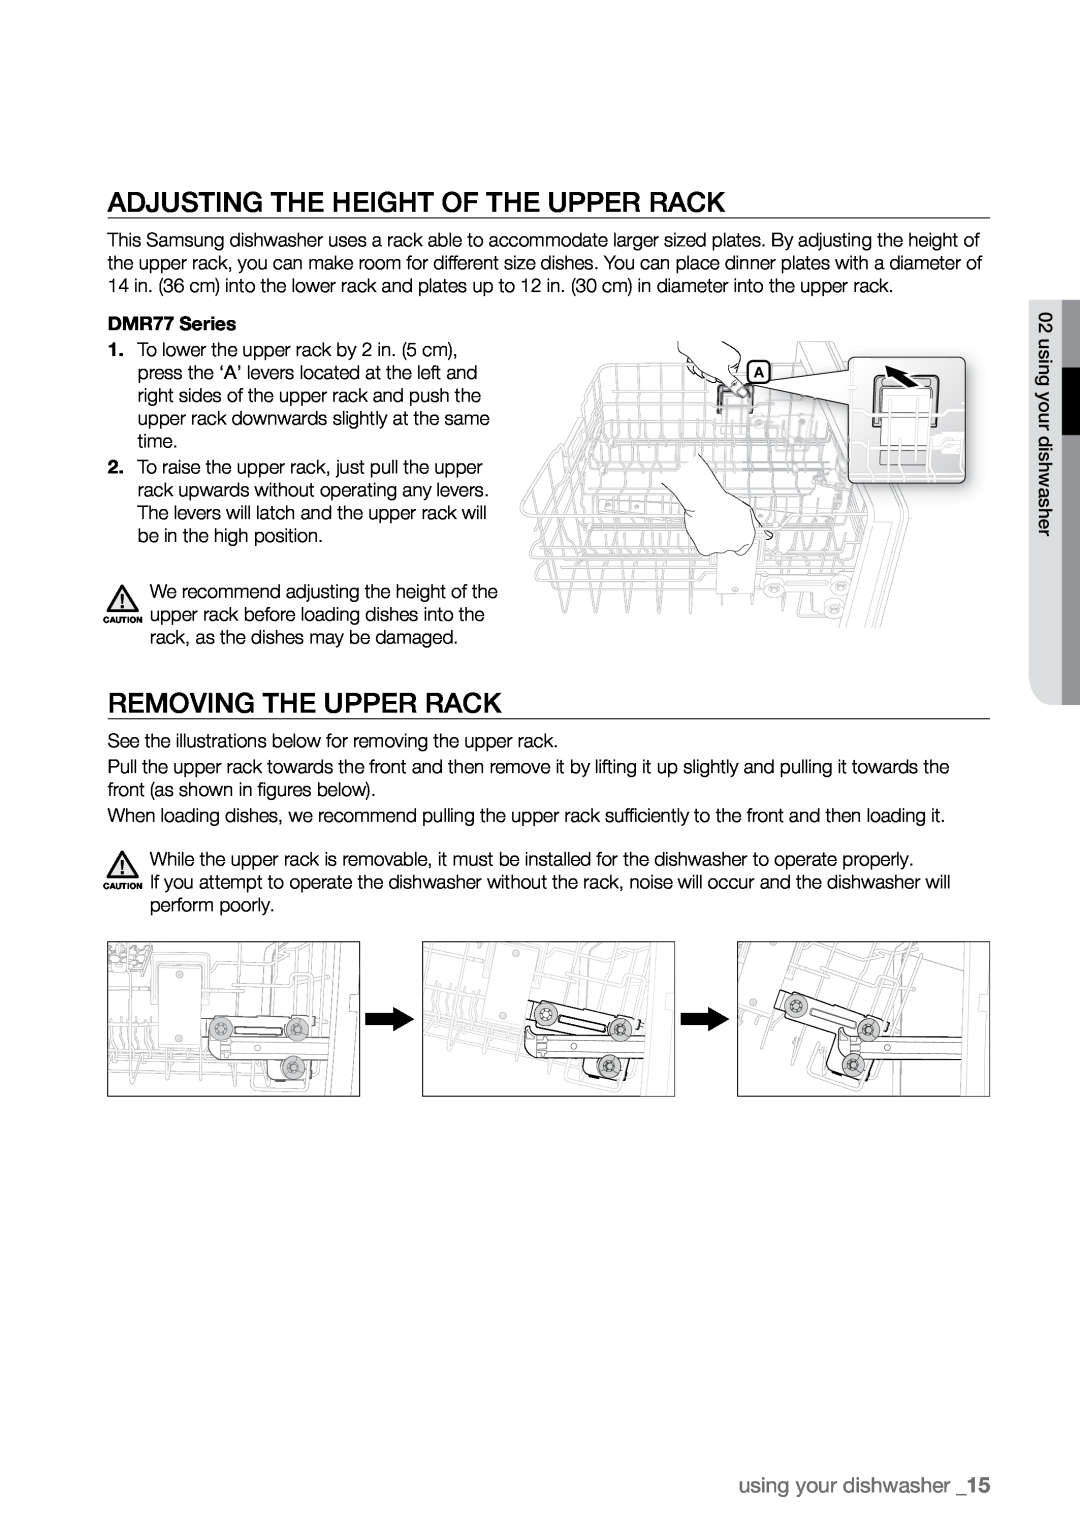 Samsung DMR77LHS Adjusting the height of the upper rack, Removing the upper rack, using your dishwasher, DMR77 Series 